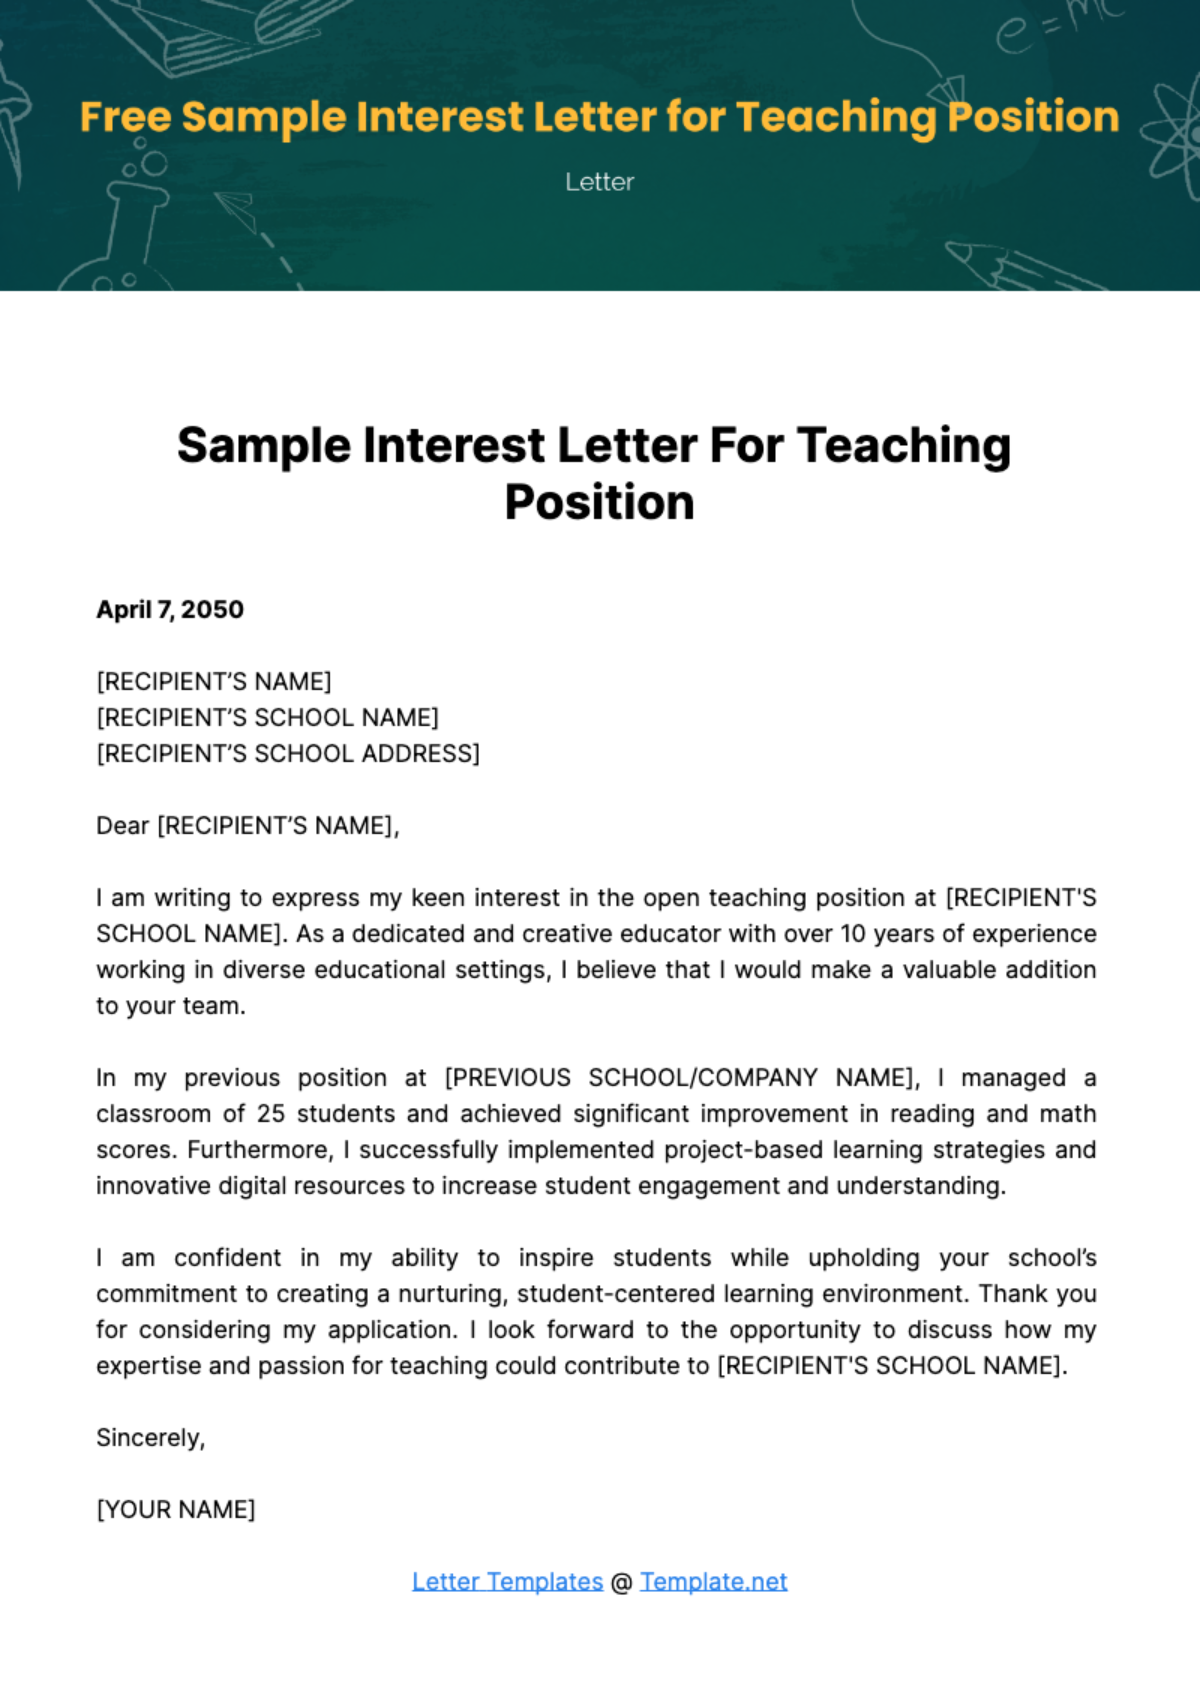 Free Sample Interest Letter for Teaching Position Template